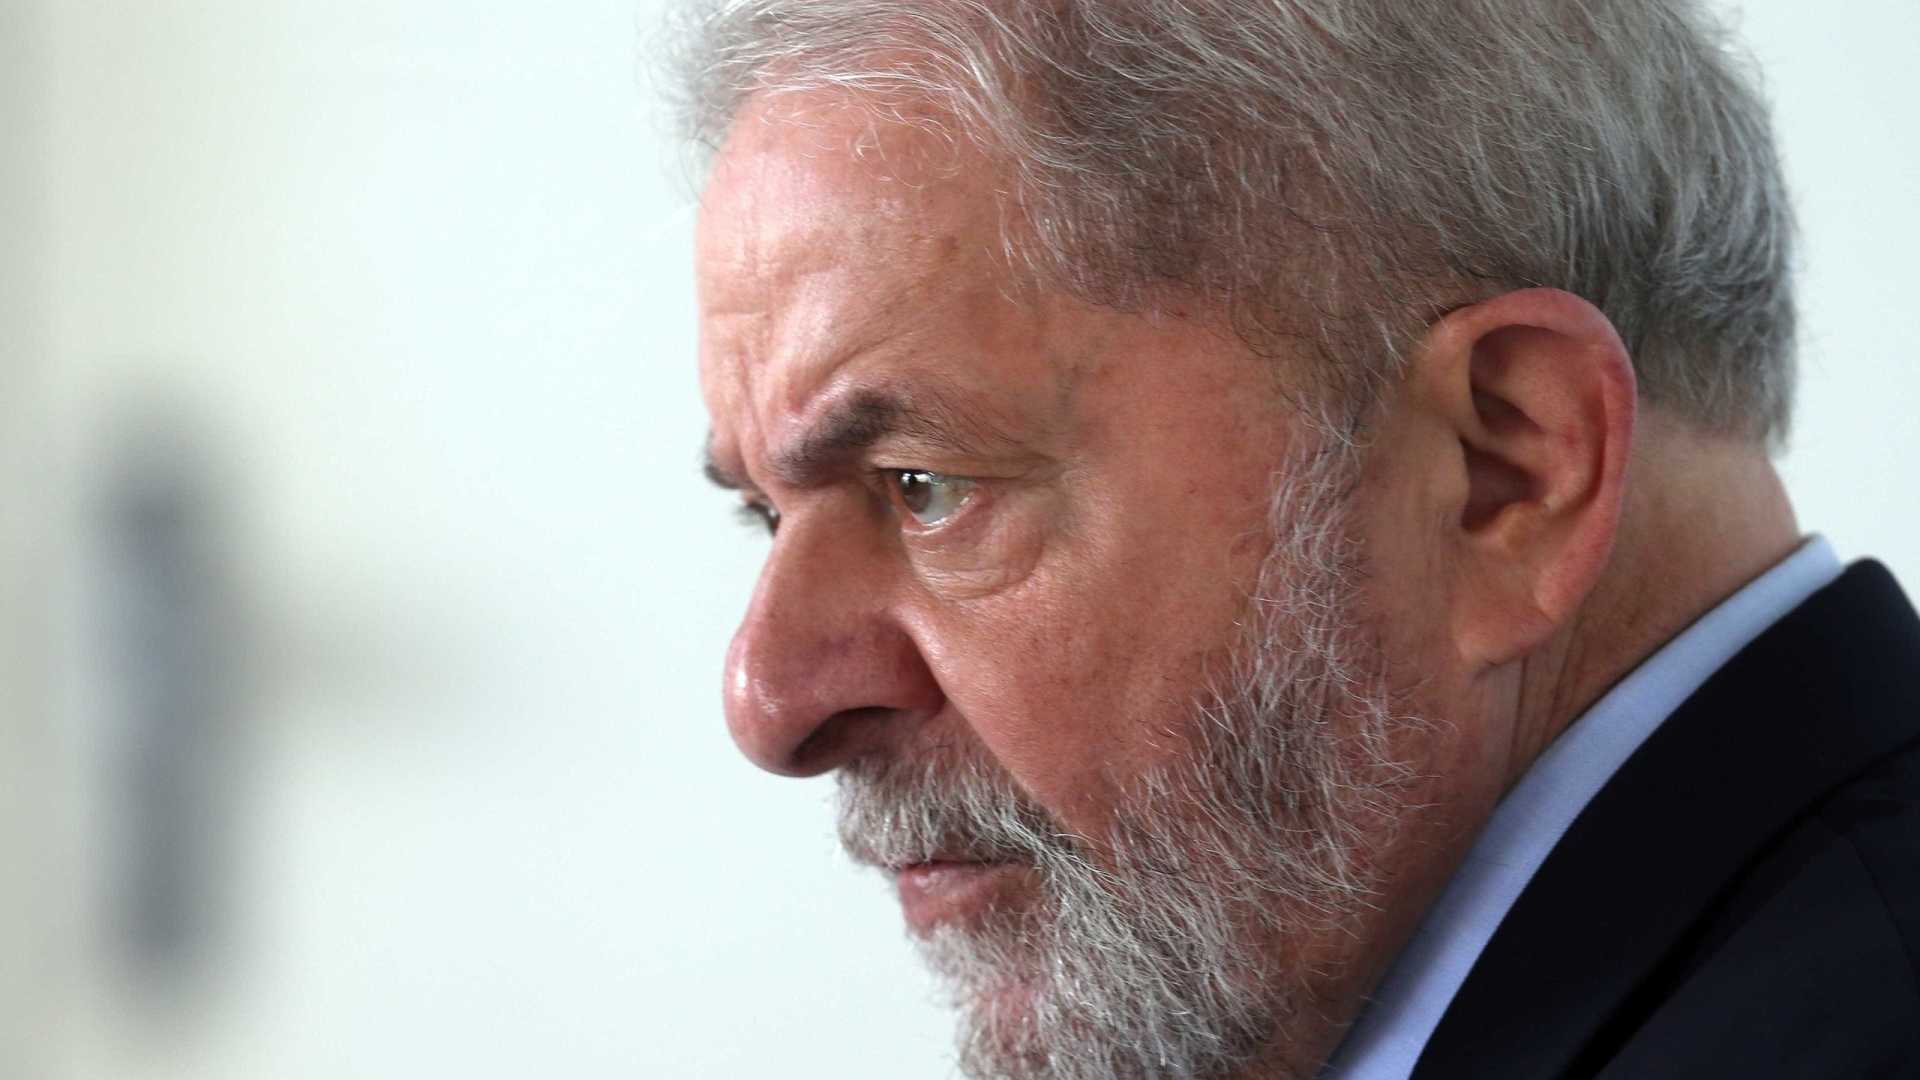 Na Justiça tem muito mau caráter, diz Lula em missa para Marisa Letícia